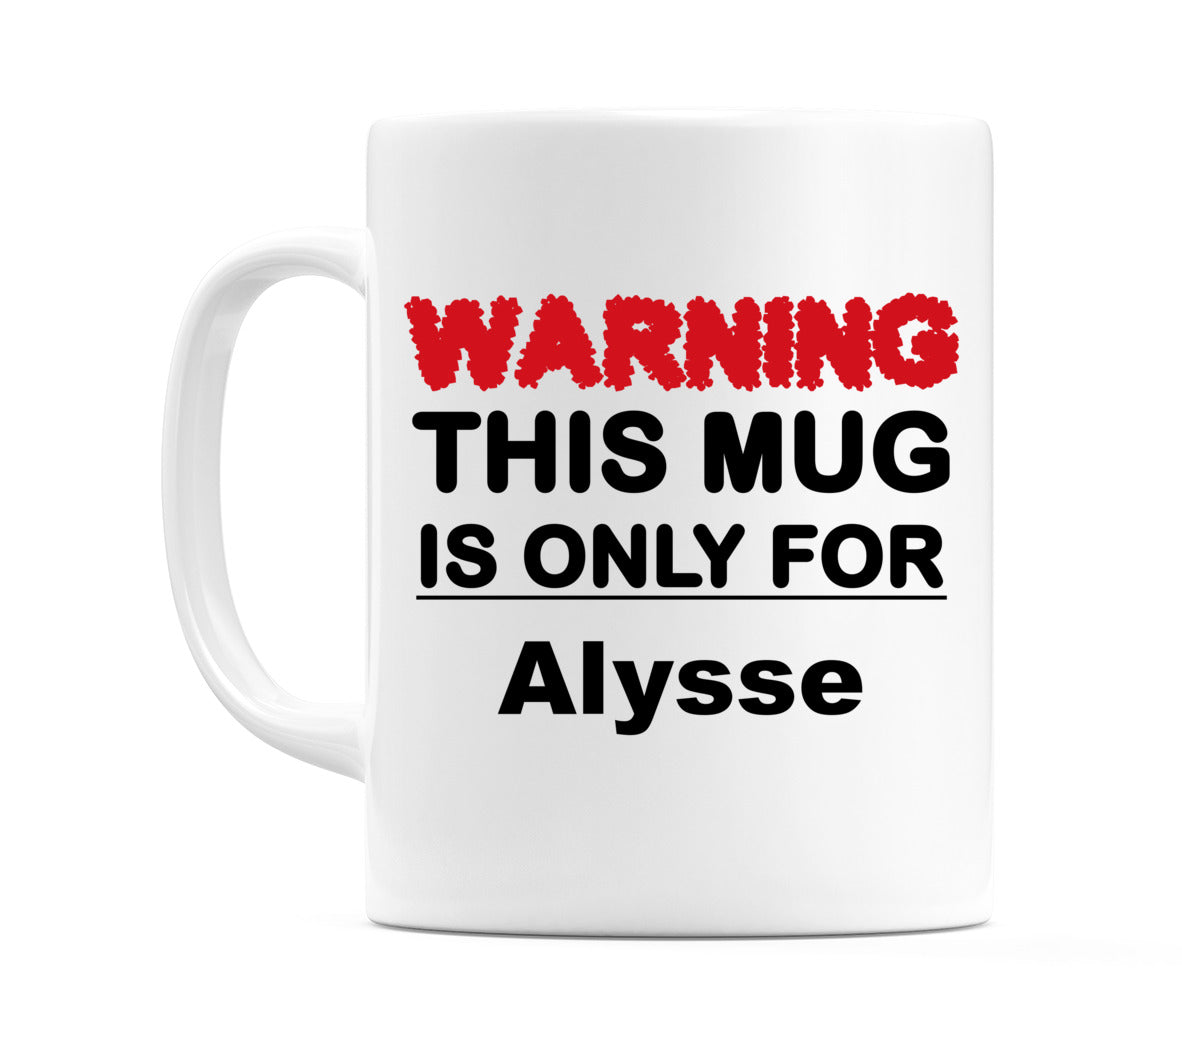 Warning This Mug is ONLY for Alysse Mug